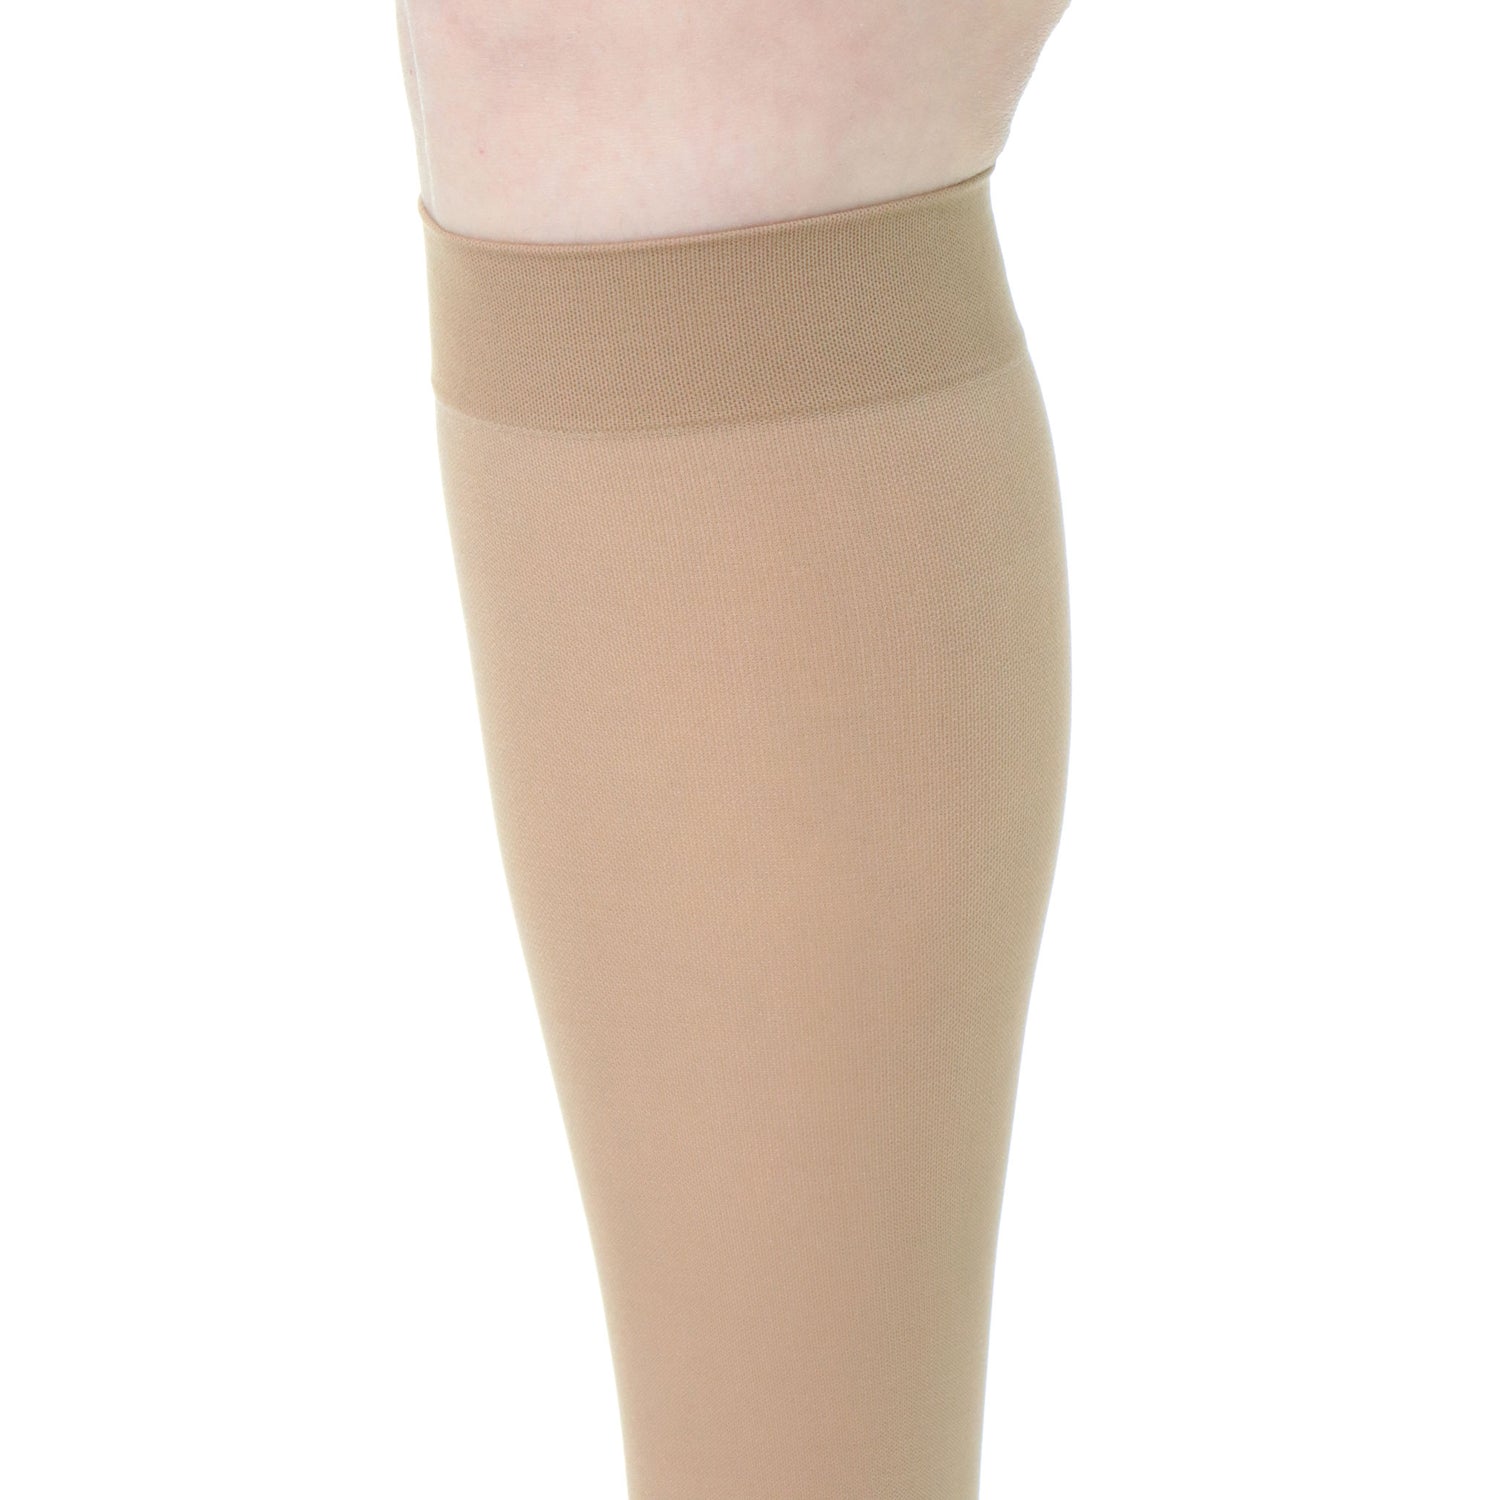 30 40 mmHg - Open Toe Compression Socks - Women